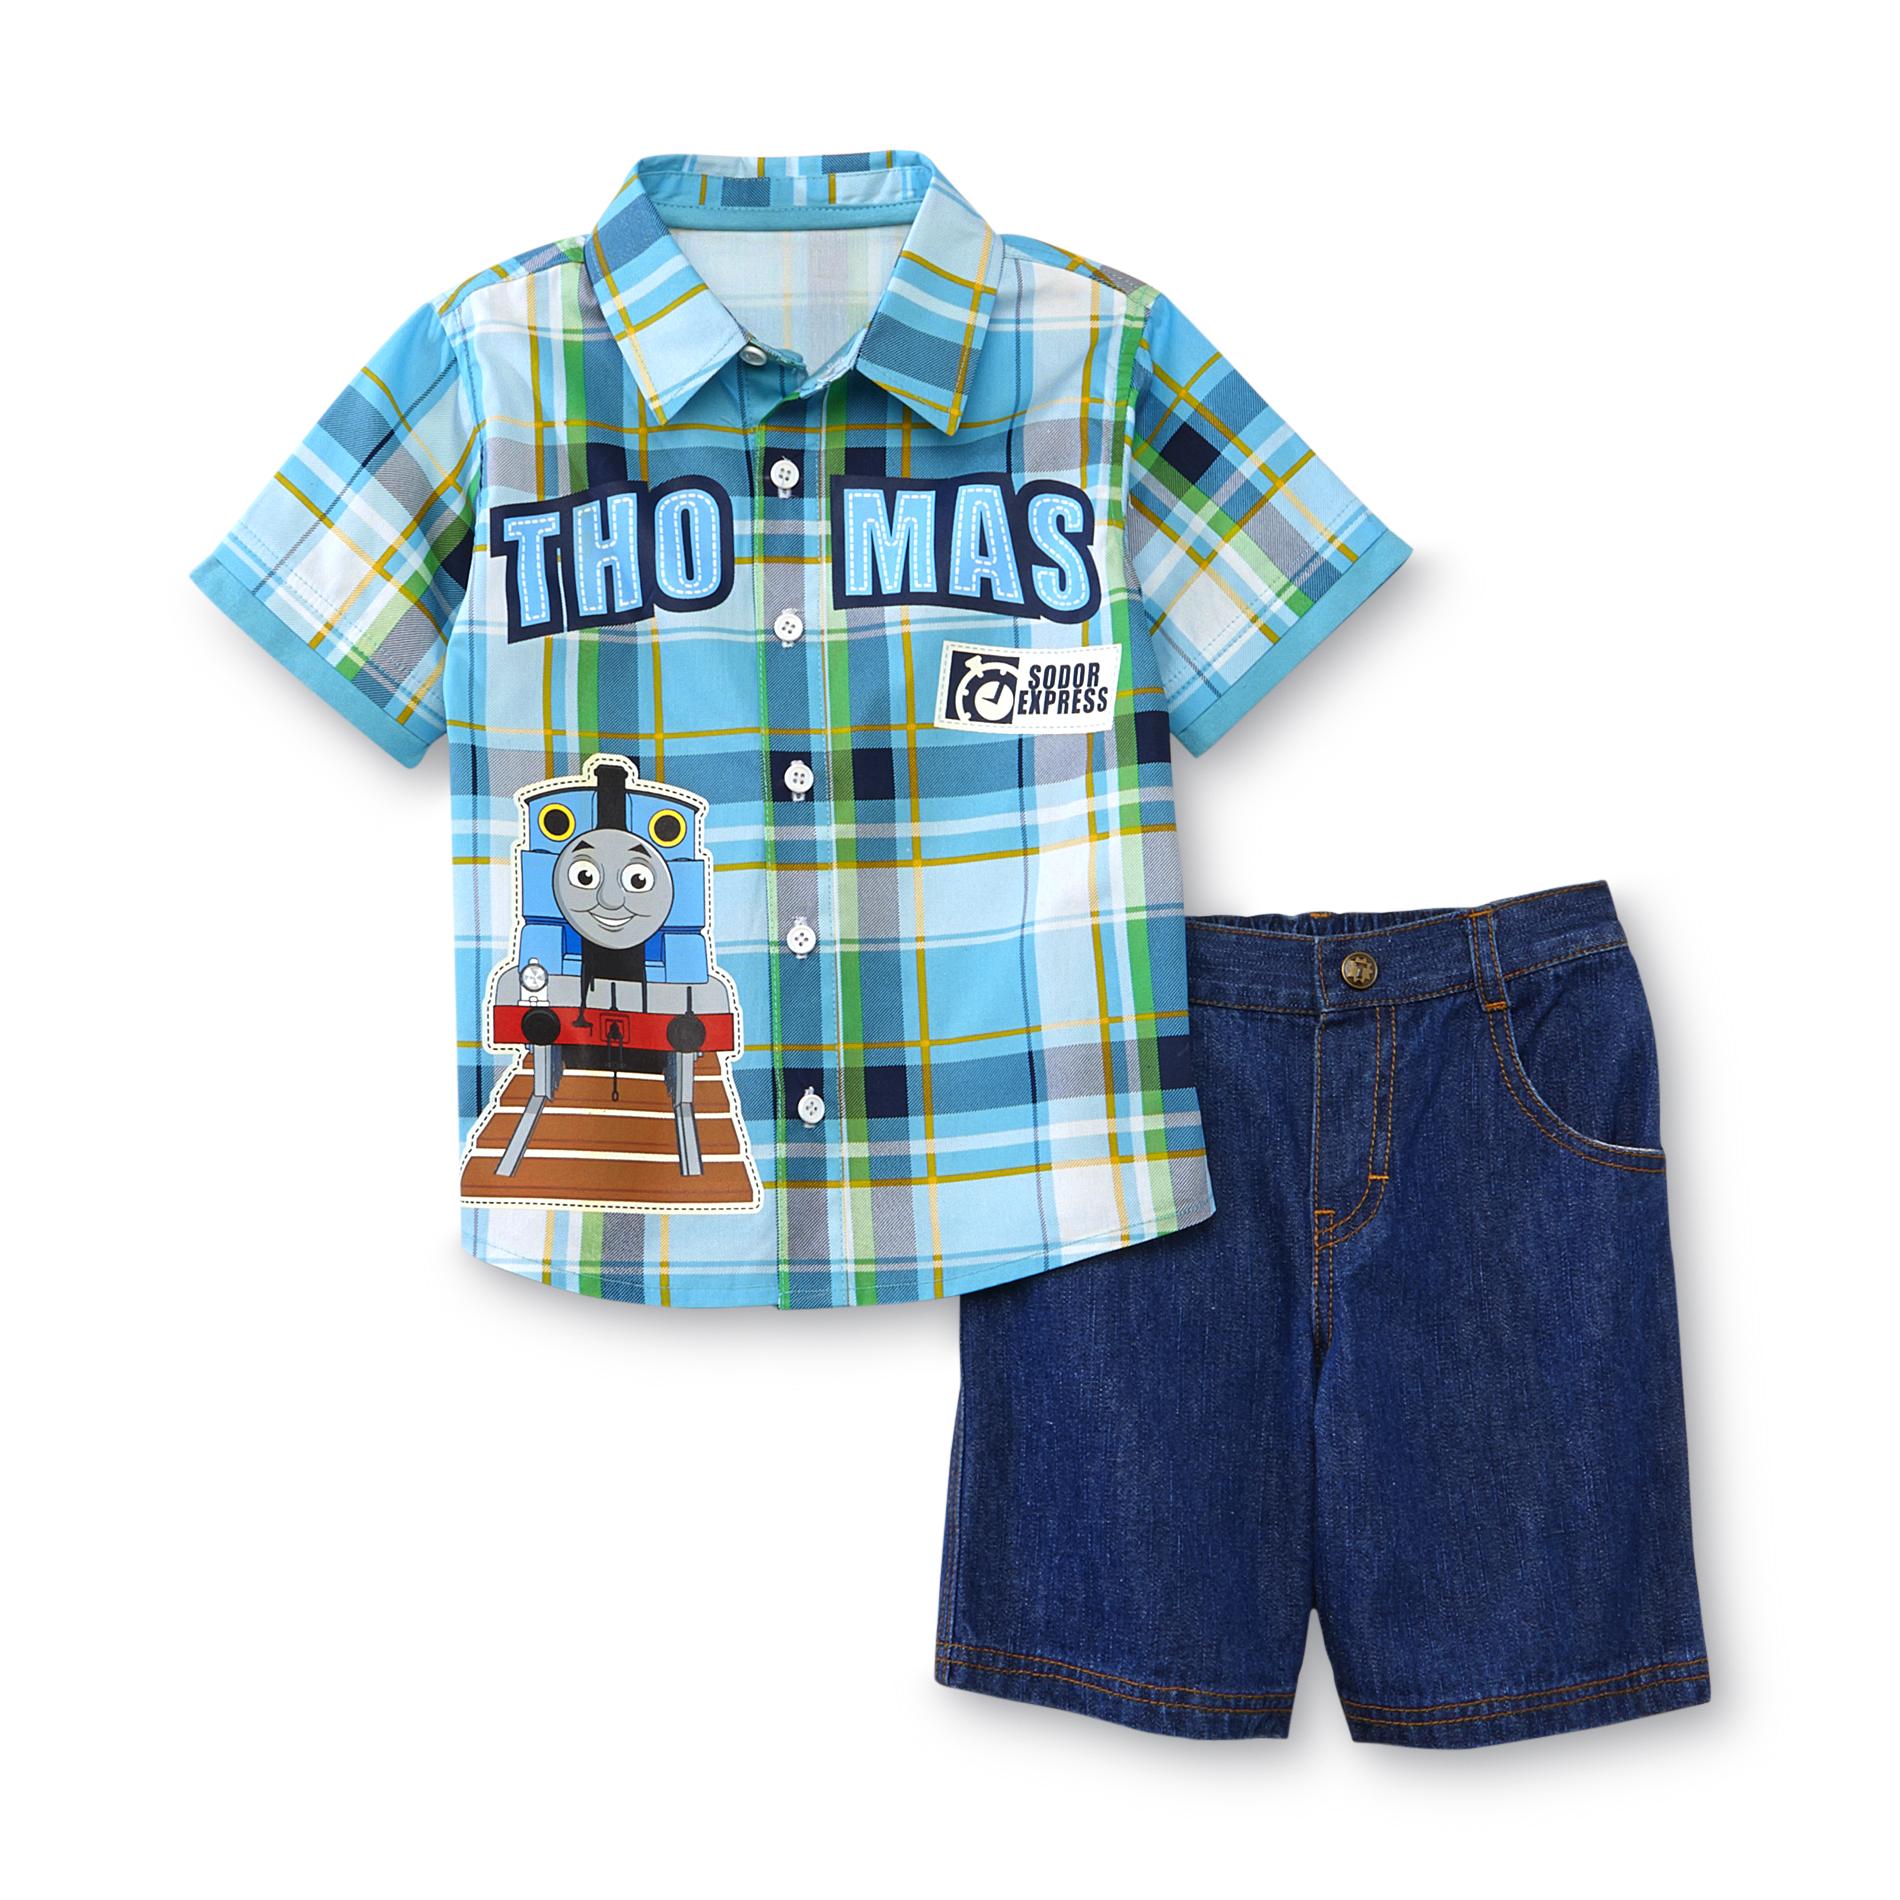 Thomas & Friends Toddler Boy's Collared Shirt & Shorts